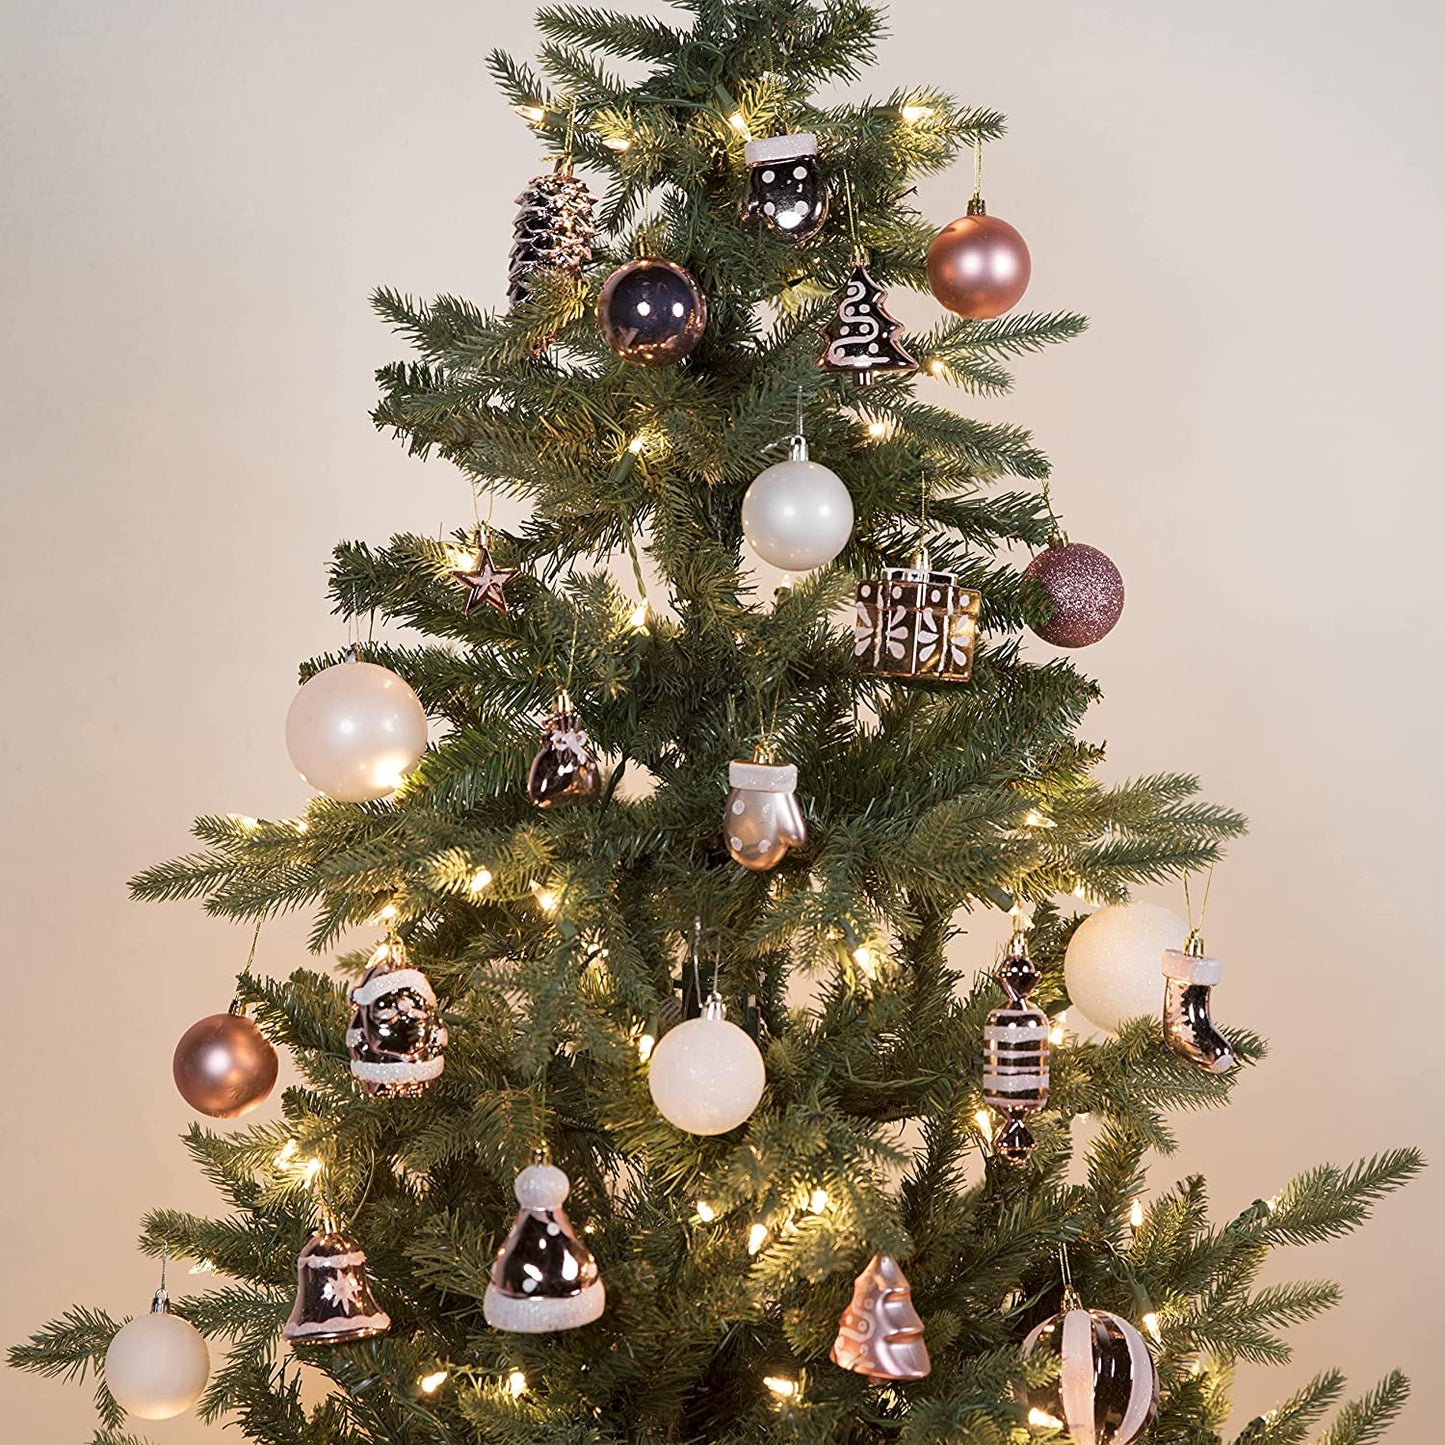 81 Pcs Assorted Shape Christmas Ornaments (Rosegold&White)